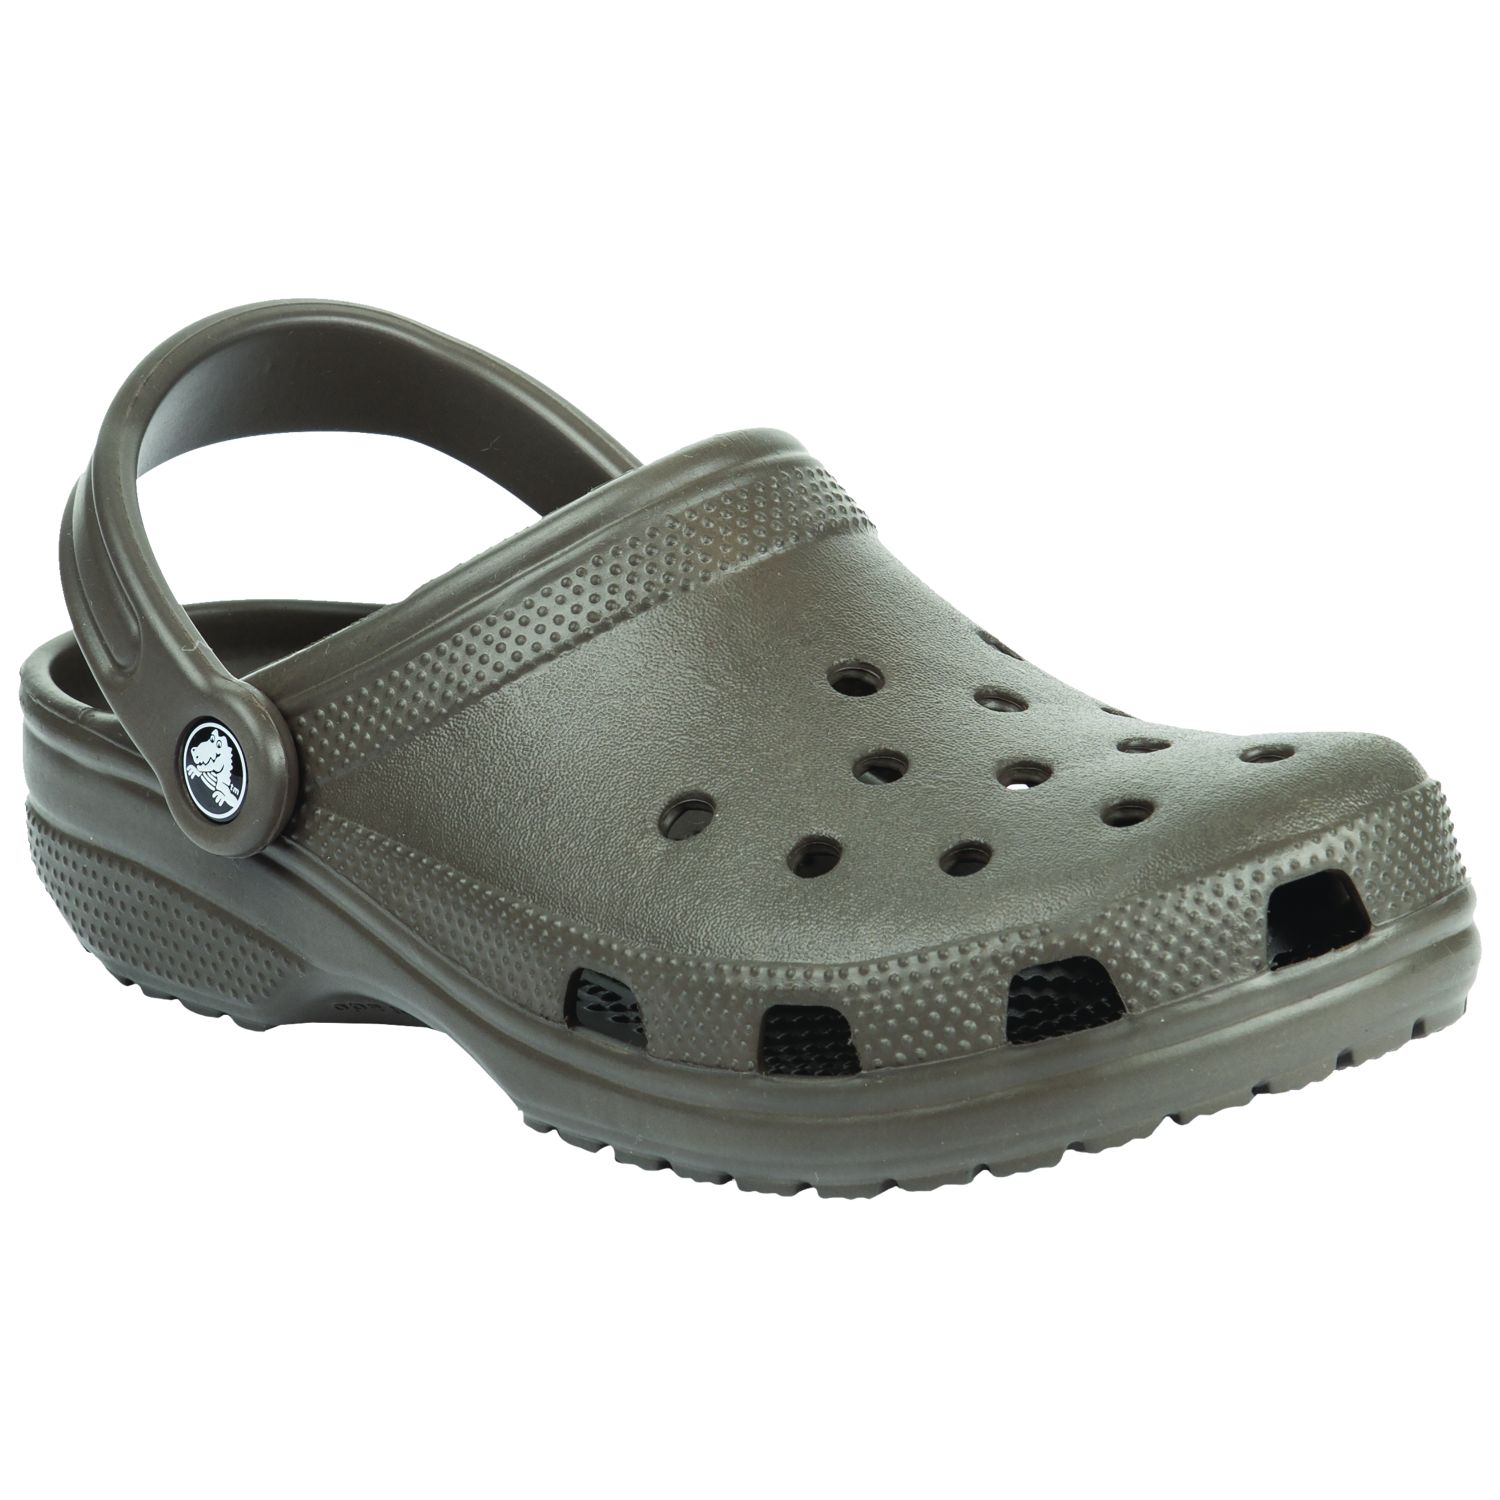  Crocs  Men s  Classic Sandal